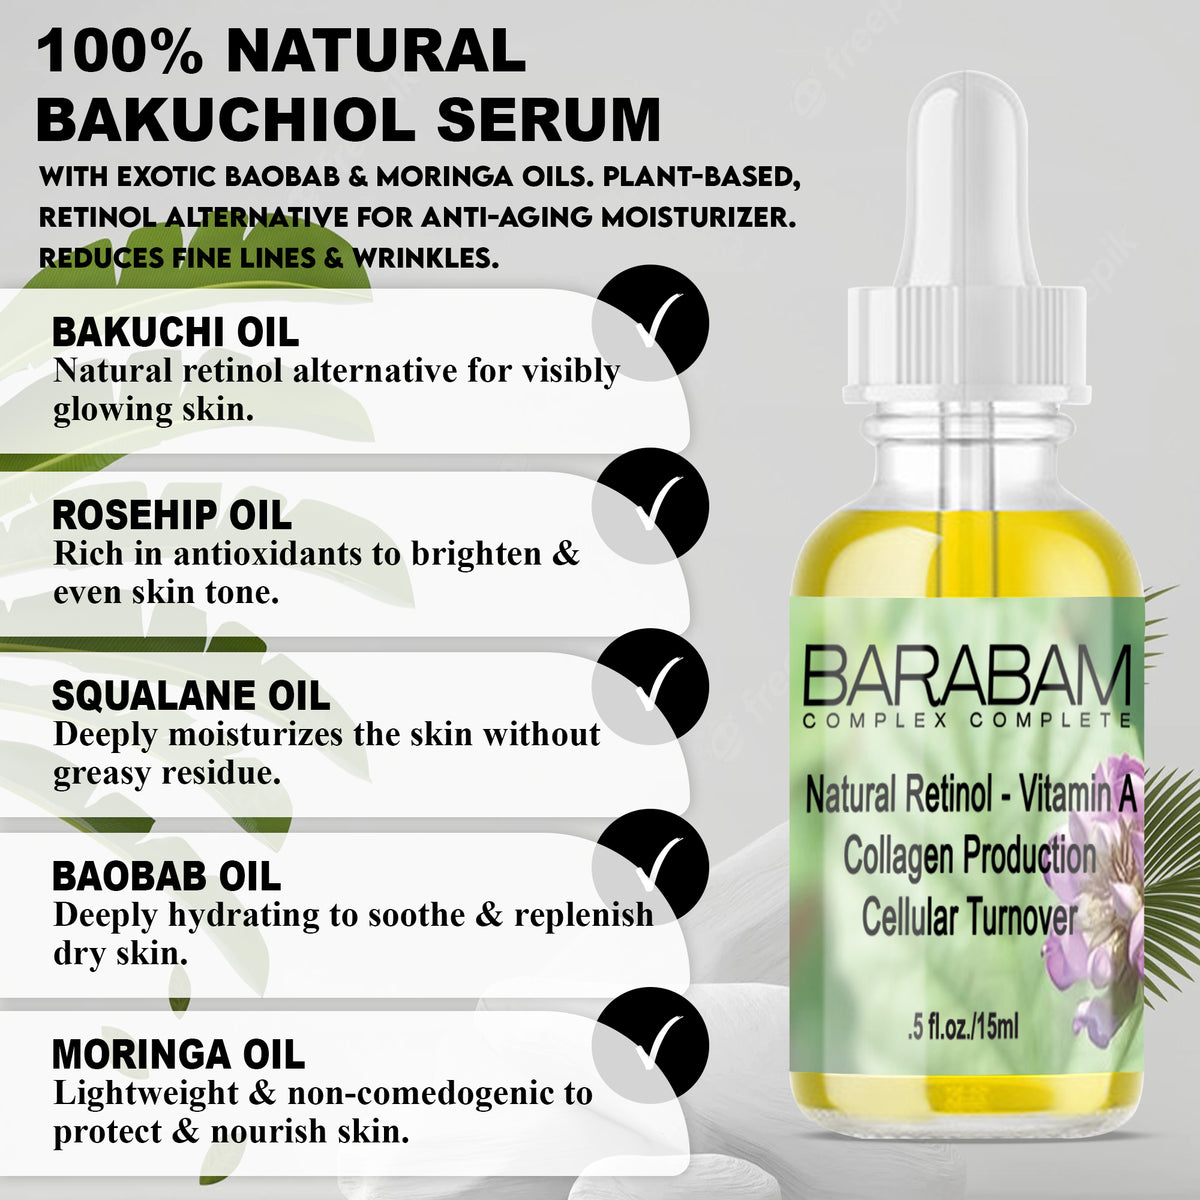 100% Natural Bakuchiol Serum + Exotic Baobab & Moringa Oils